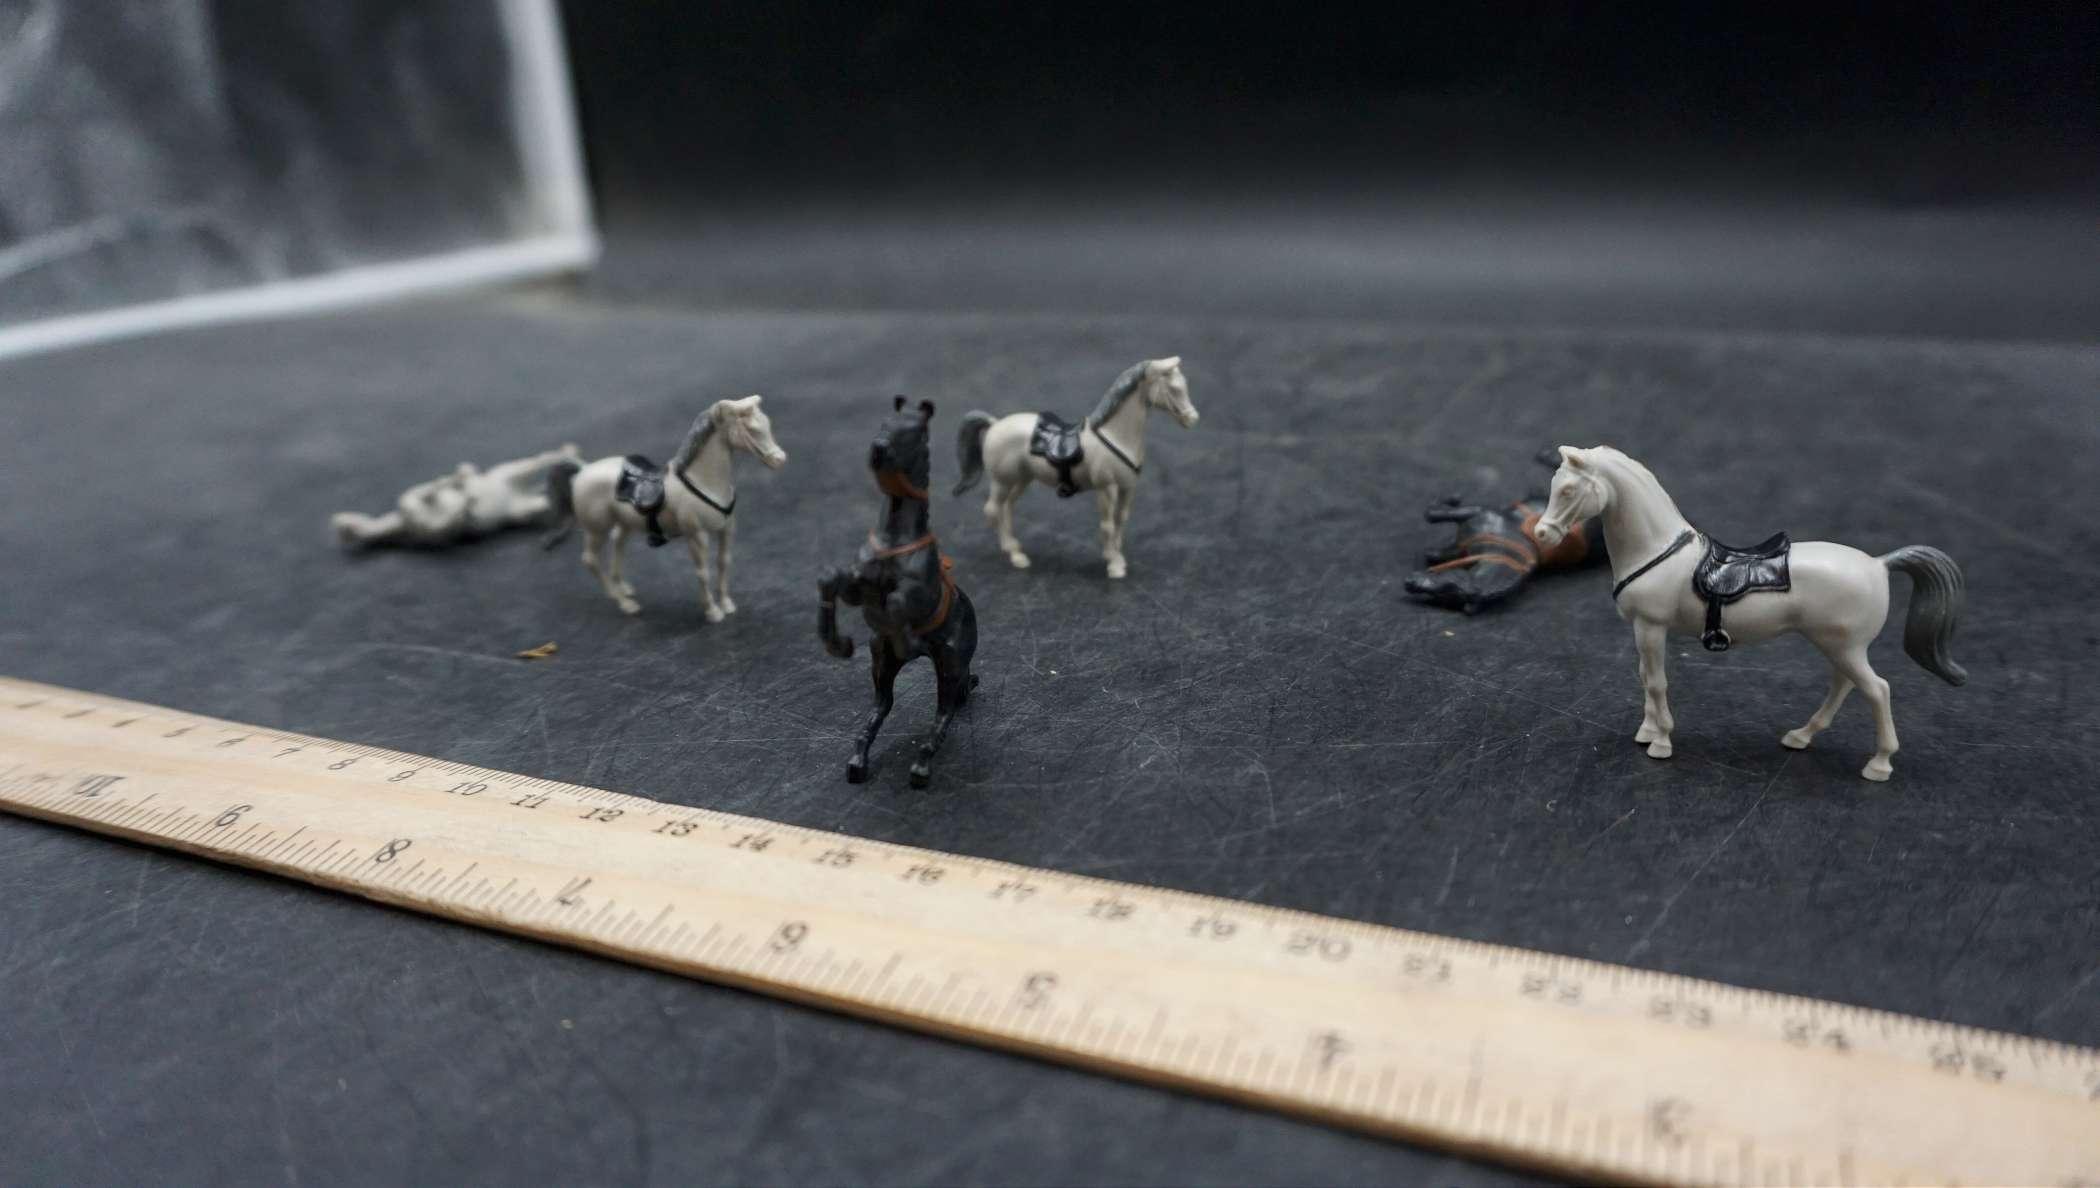 6 - Toy Horse Figurines